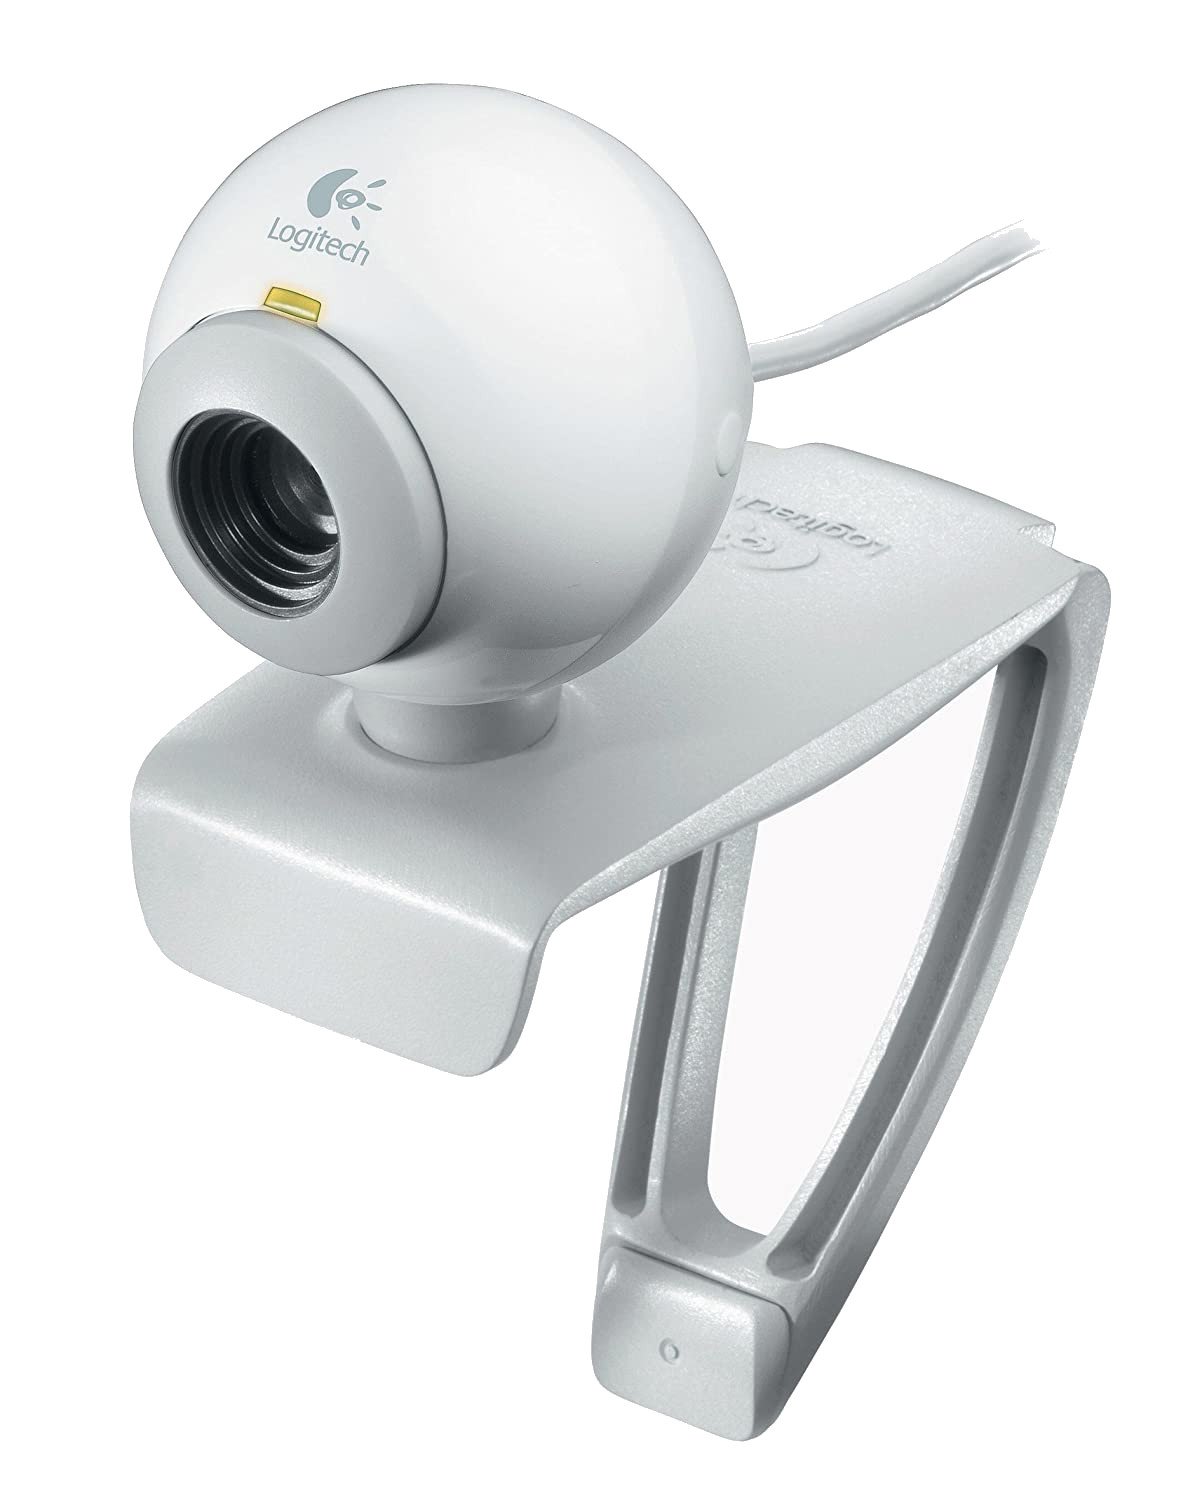 webcam 2200 Web Cam Drivers For Windows 10 logitech